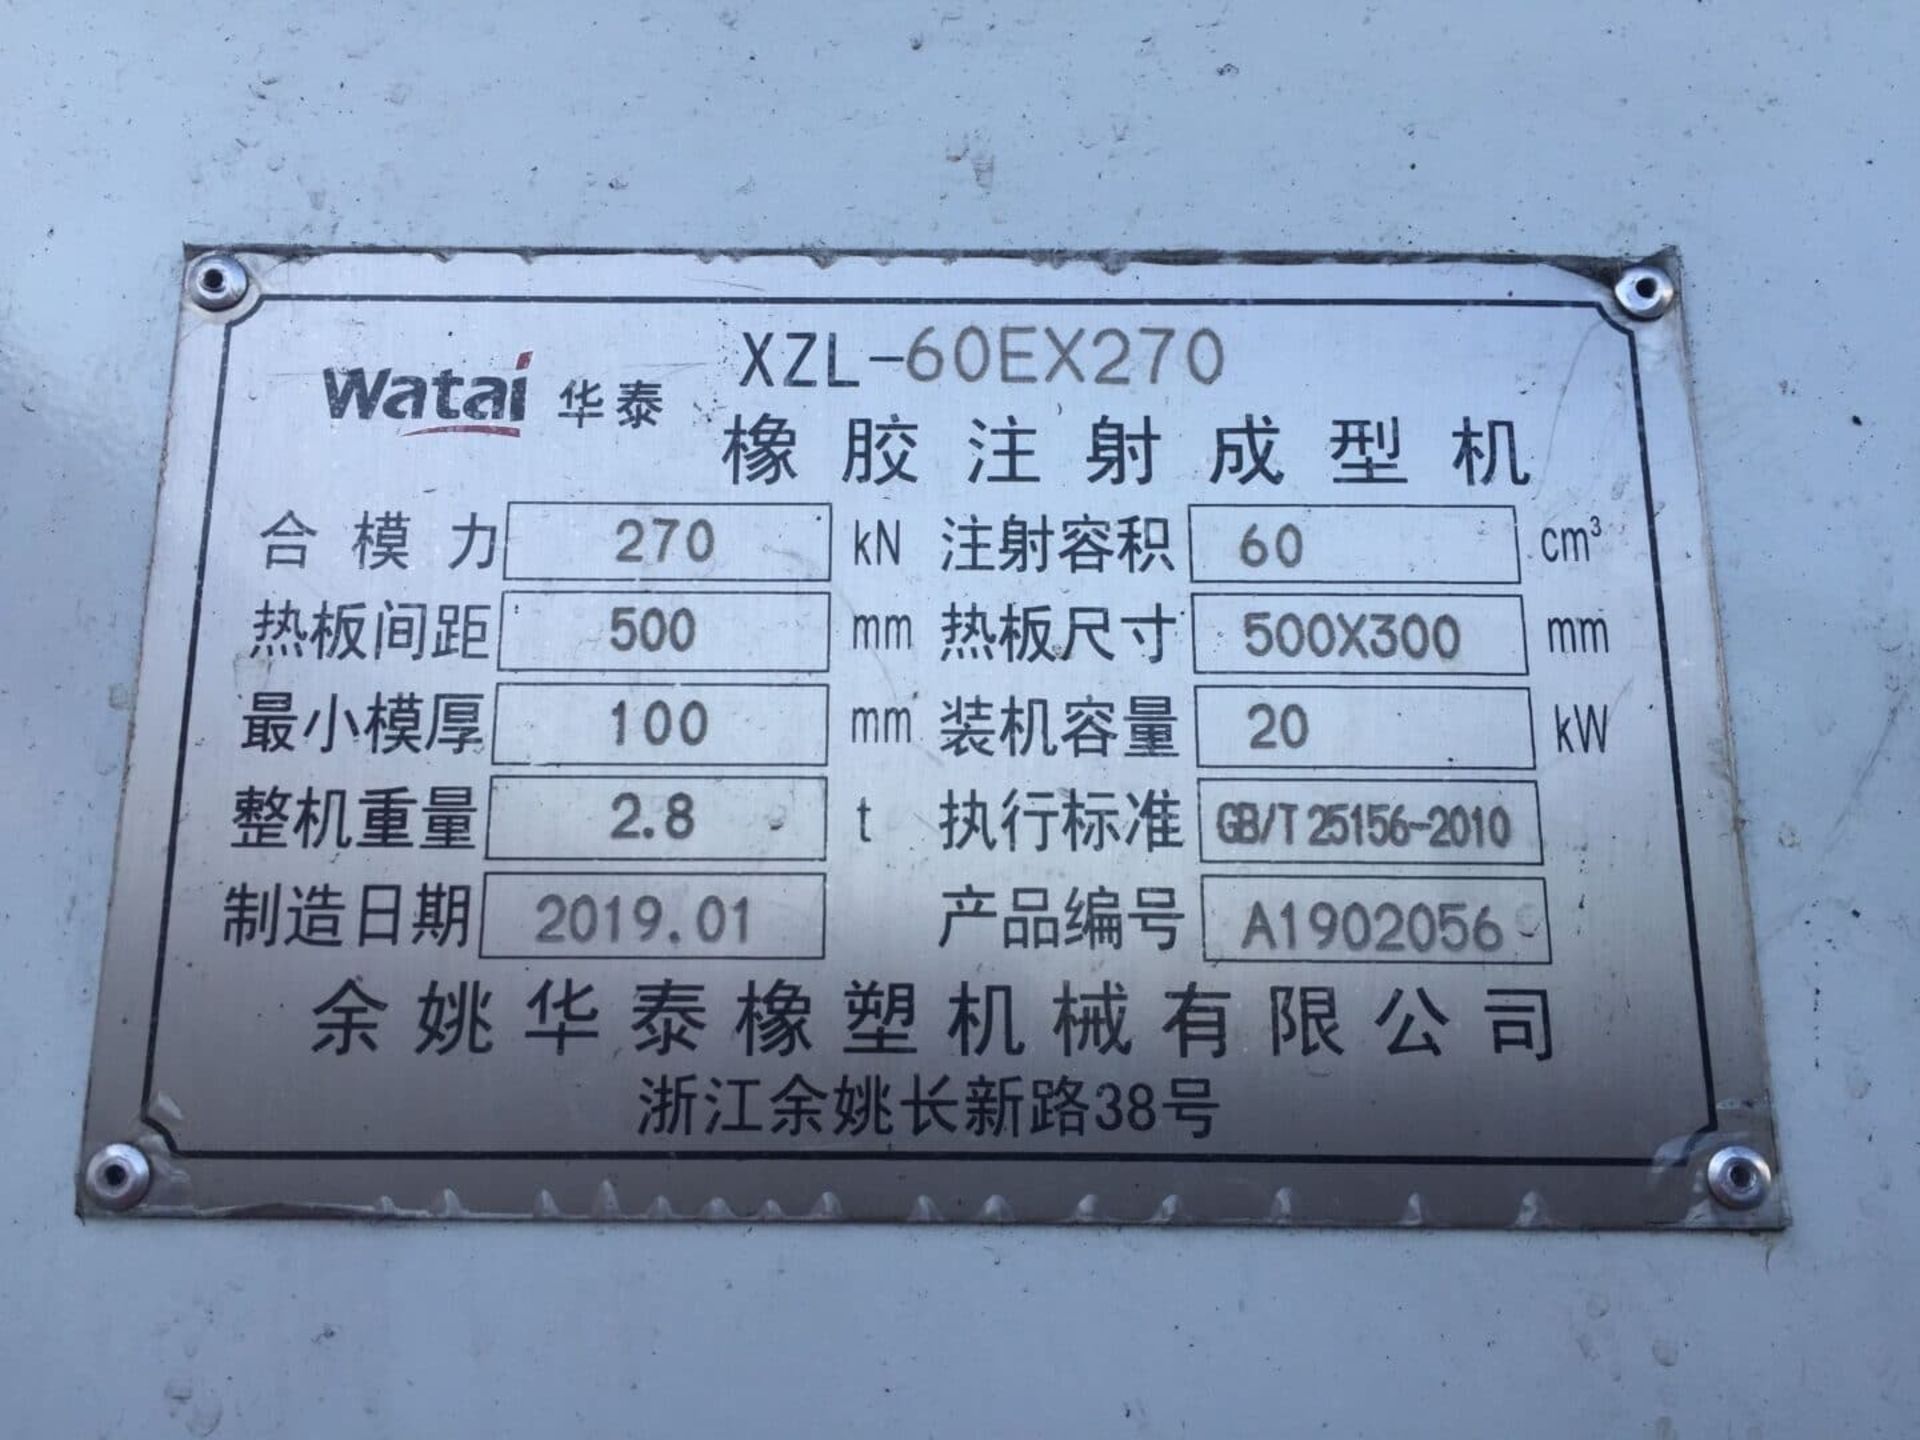 Watai Rubber Injection Molding Machine XZL-160EX27 - Image 4 of 19